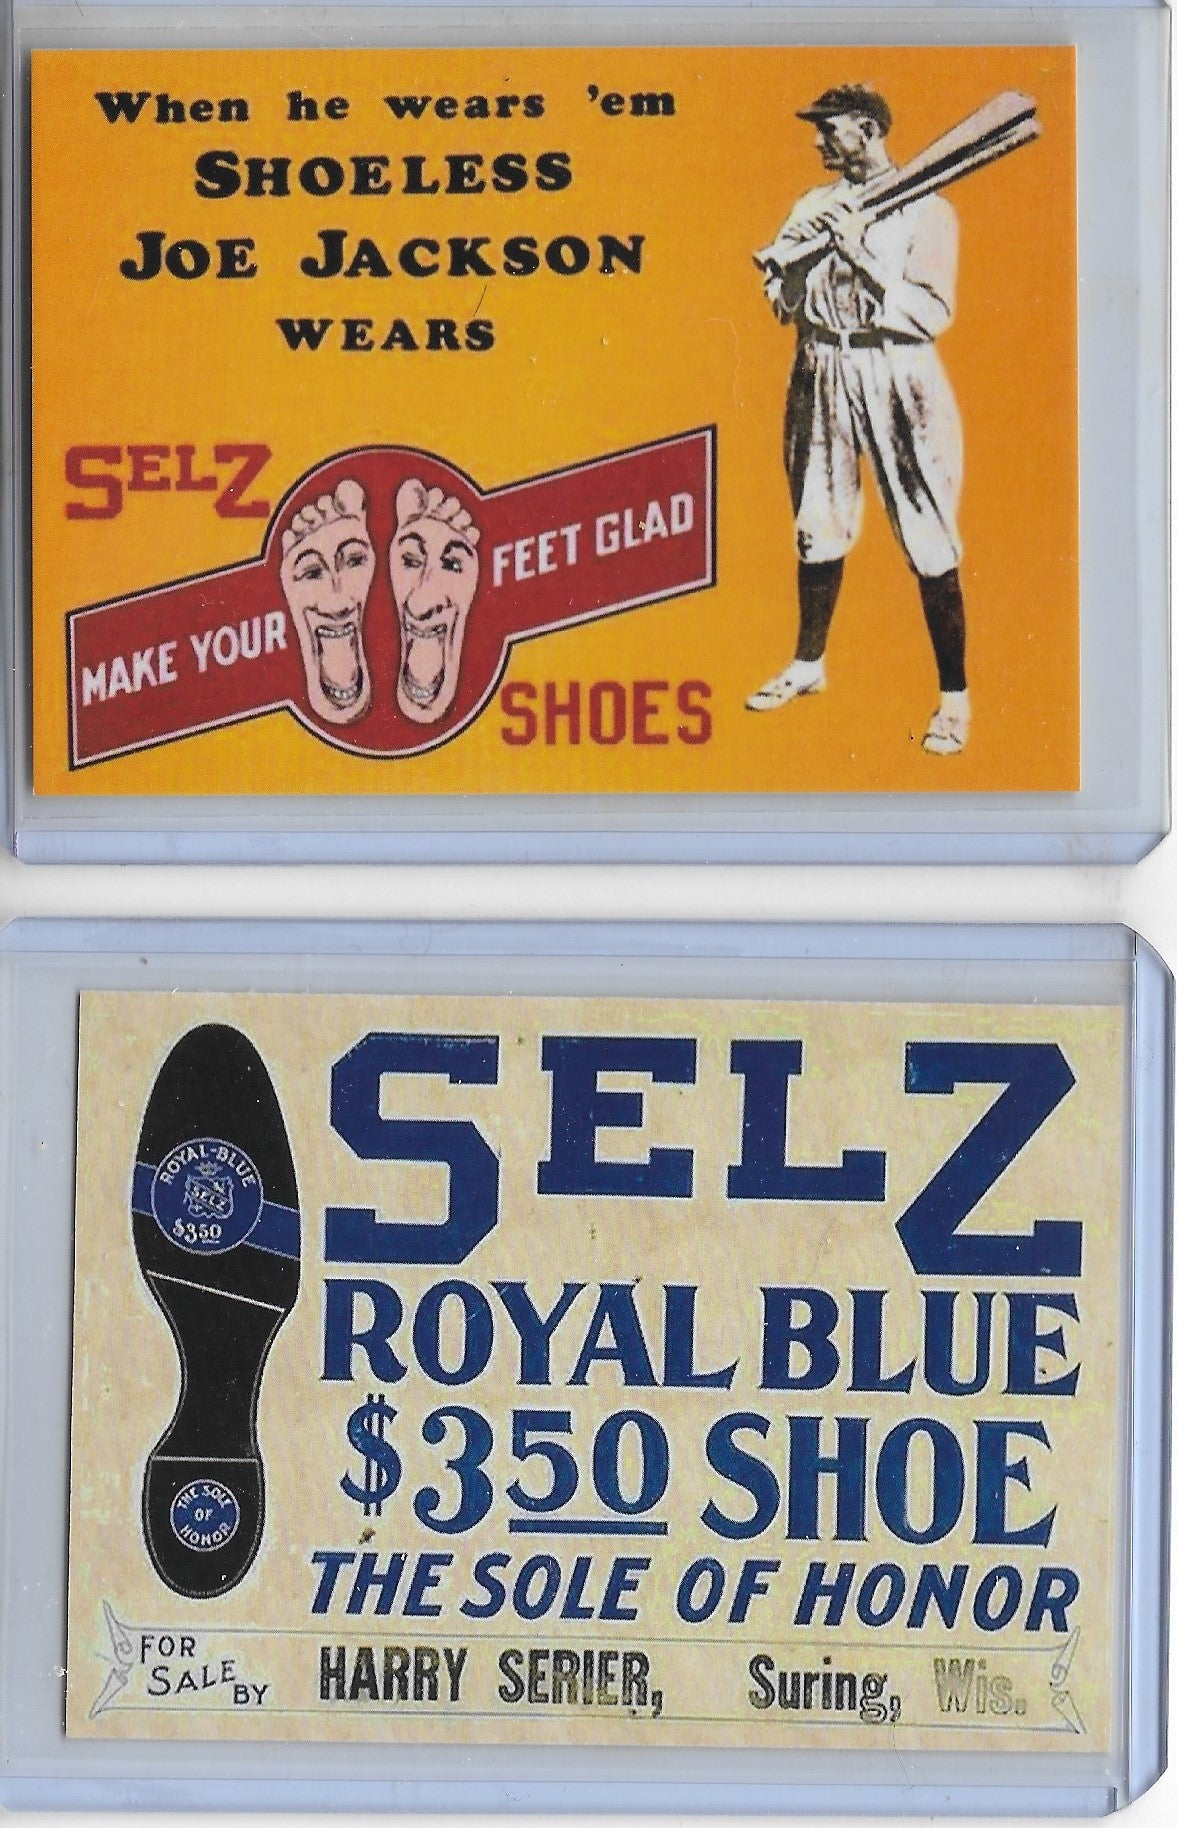 Shoeless Joe Jackson Virtual Hall of Fame - The Chicago Years 1915 - 1920